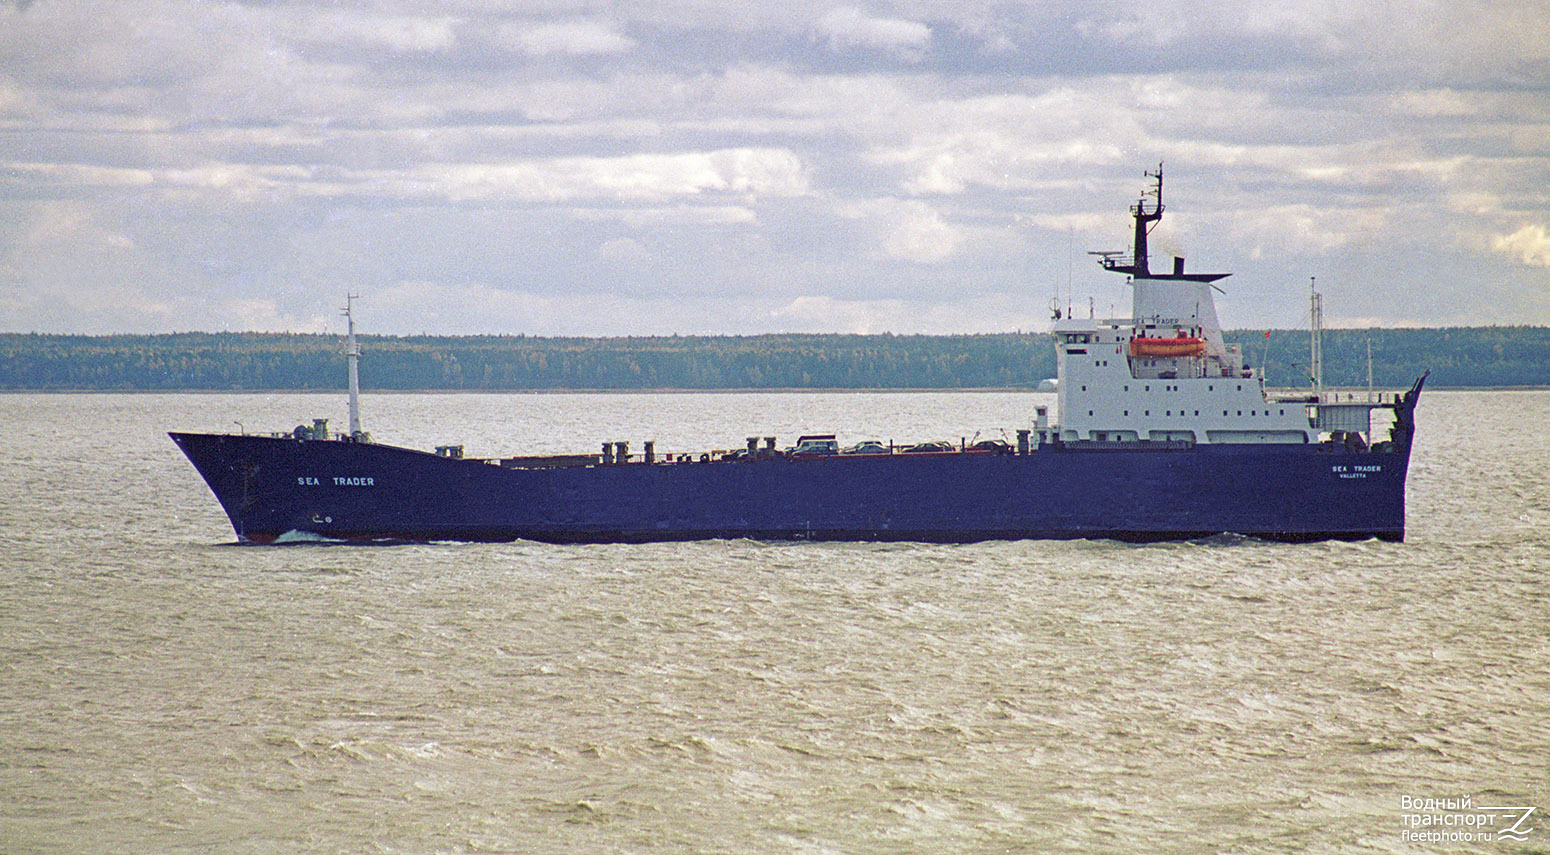 Sea Trader